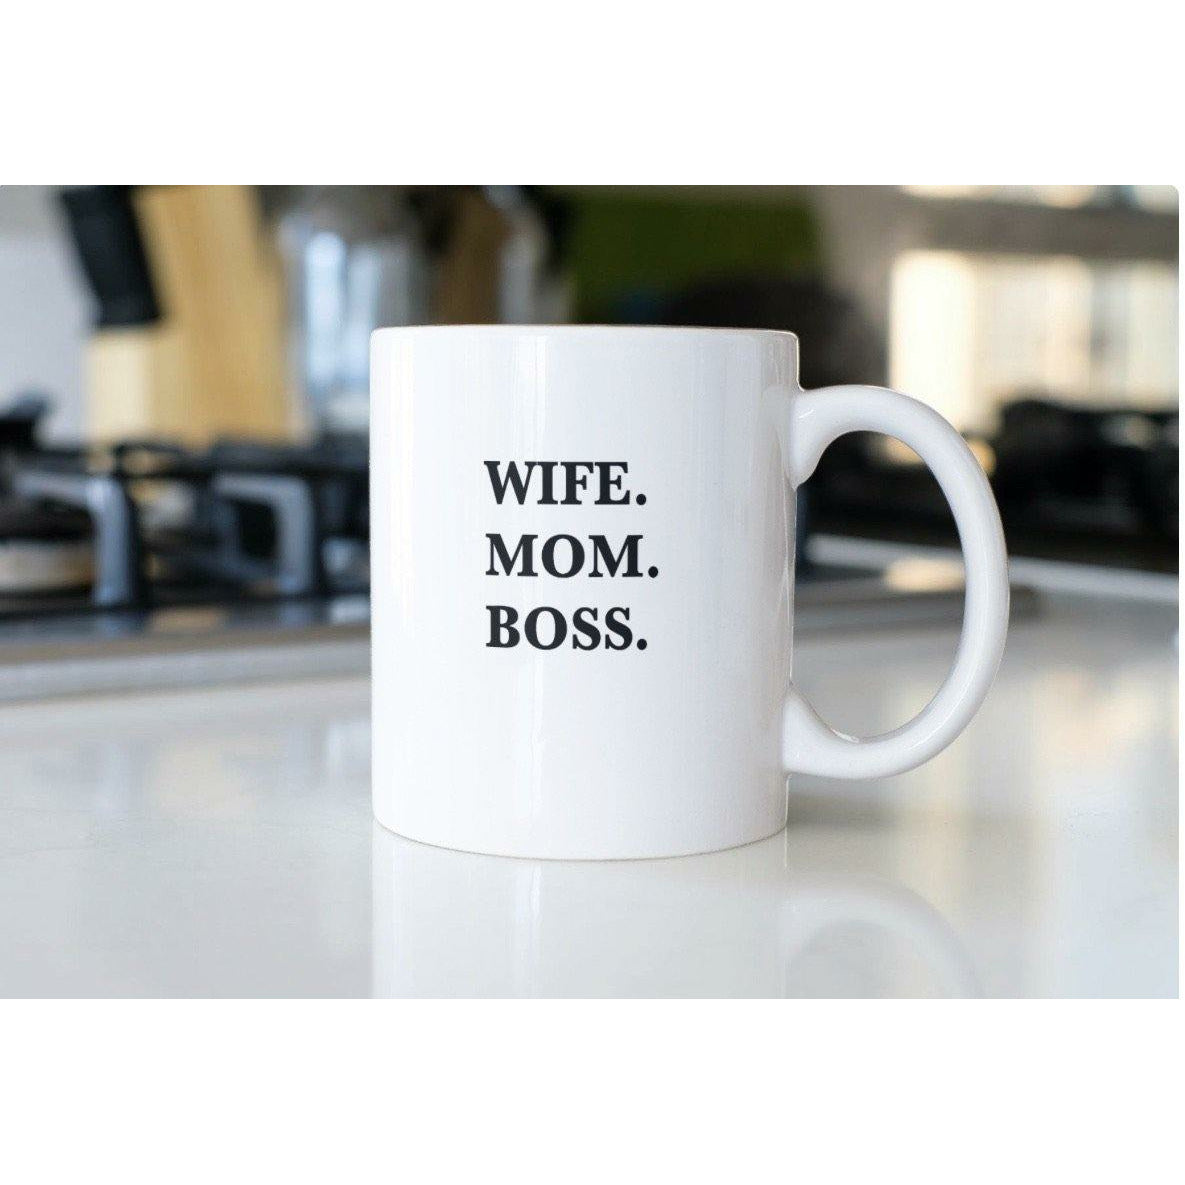 Wife Mom Boss mug - Eb Creations Wife Mom Boss mug